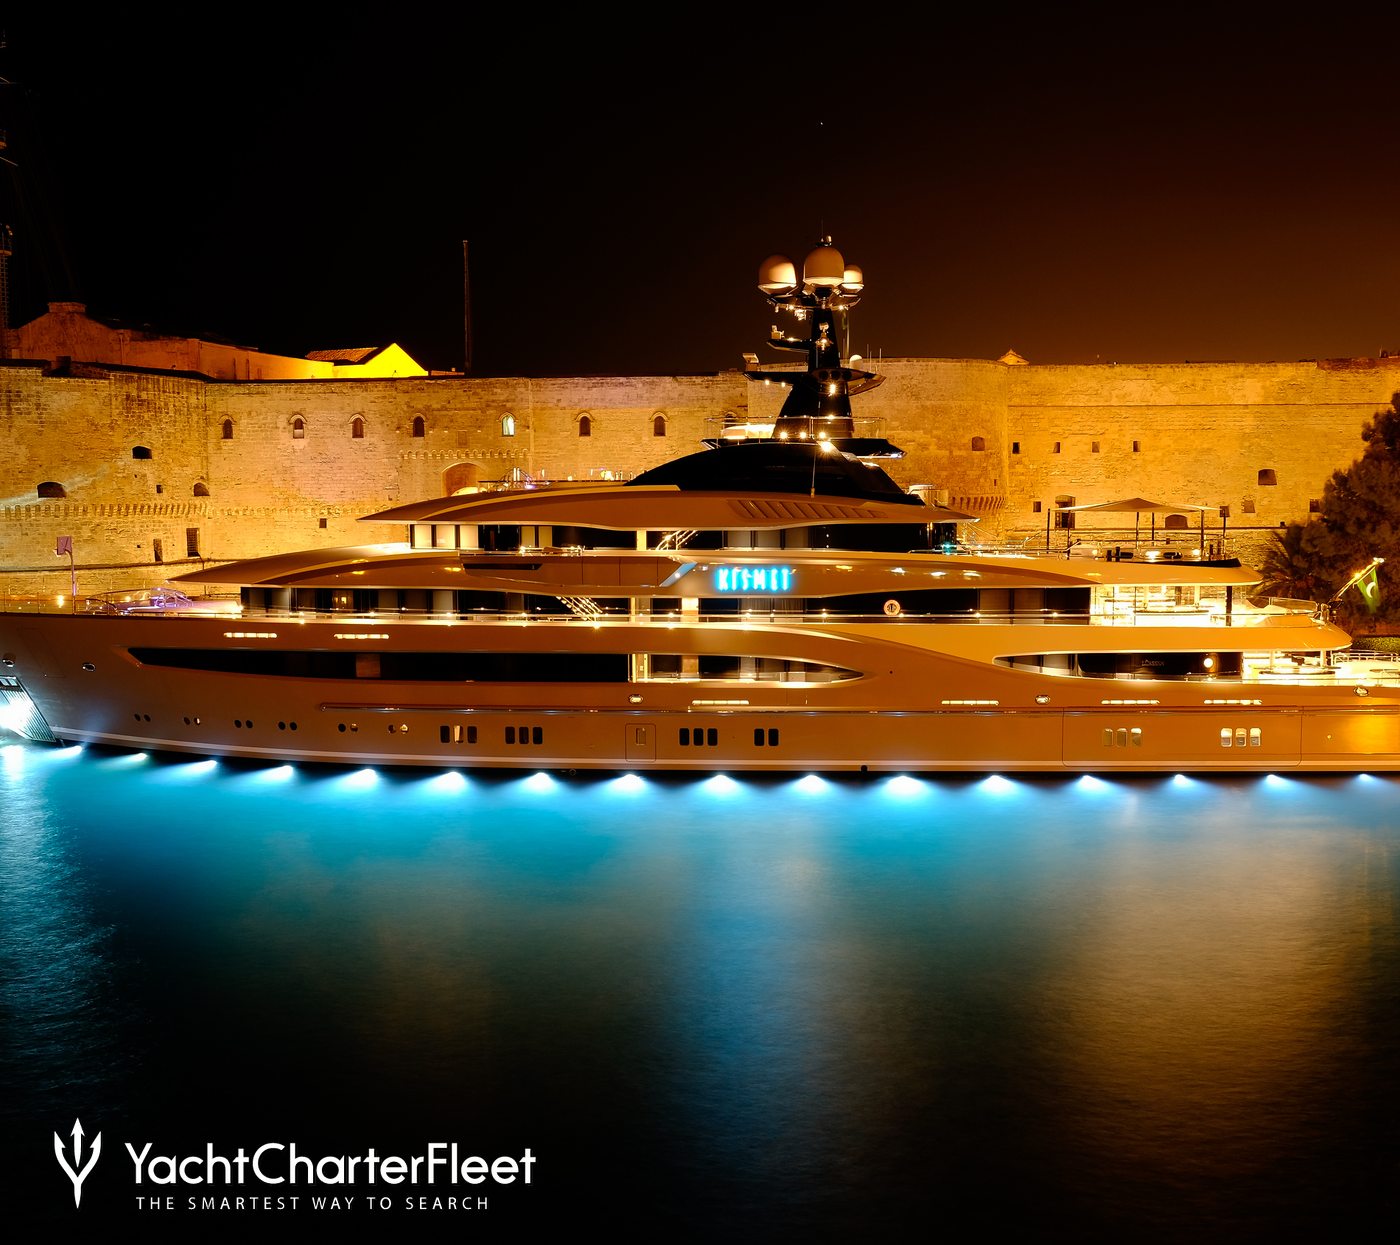 150 million dollar yacht